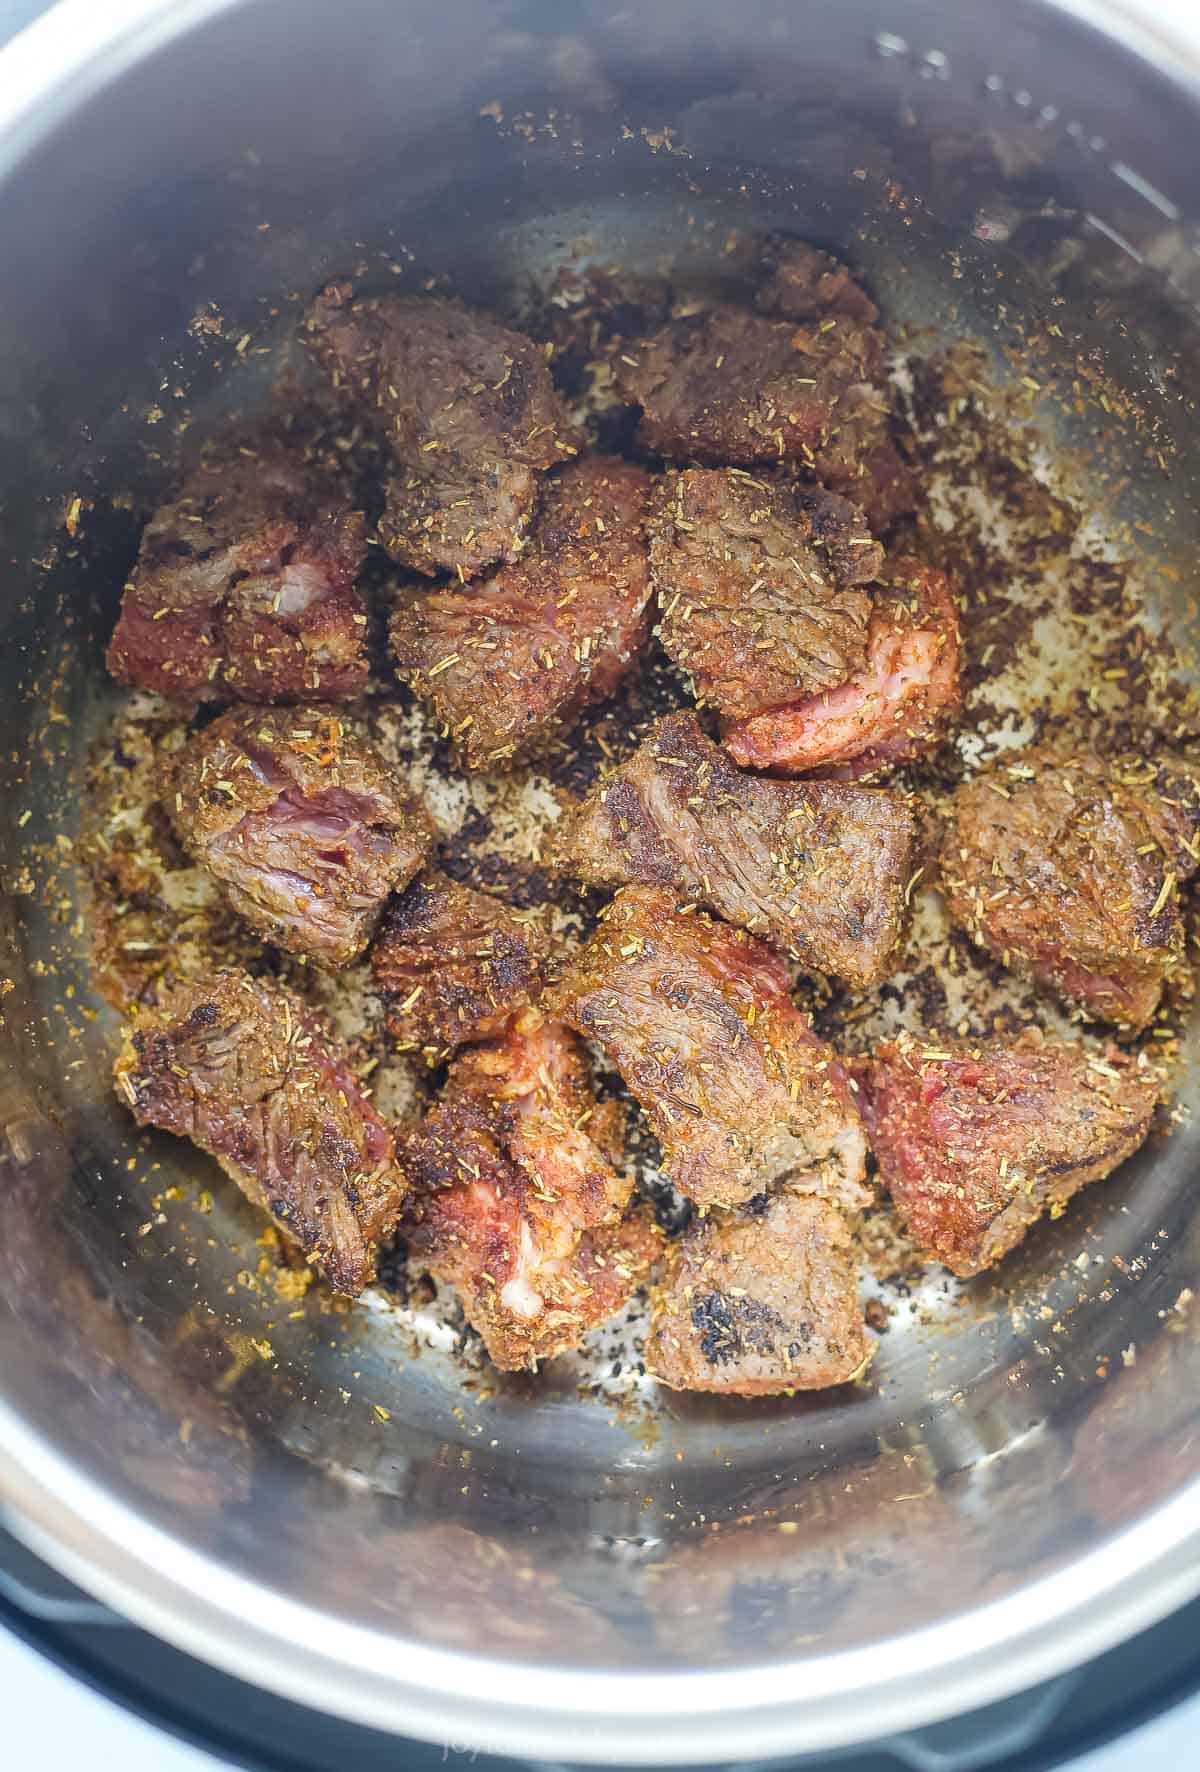 Seared steak in the instant pot. 